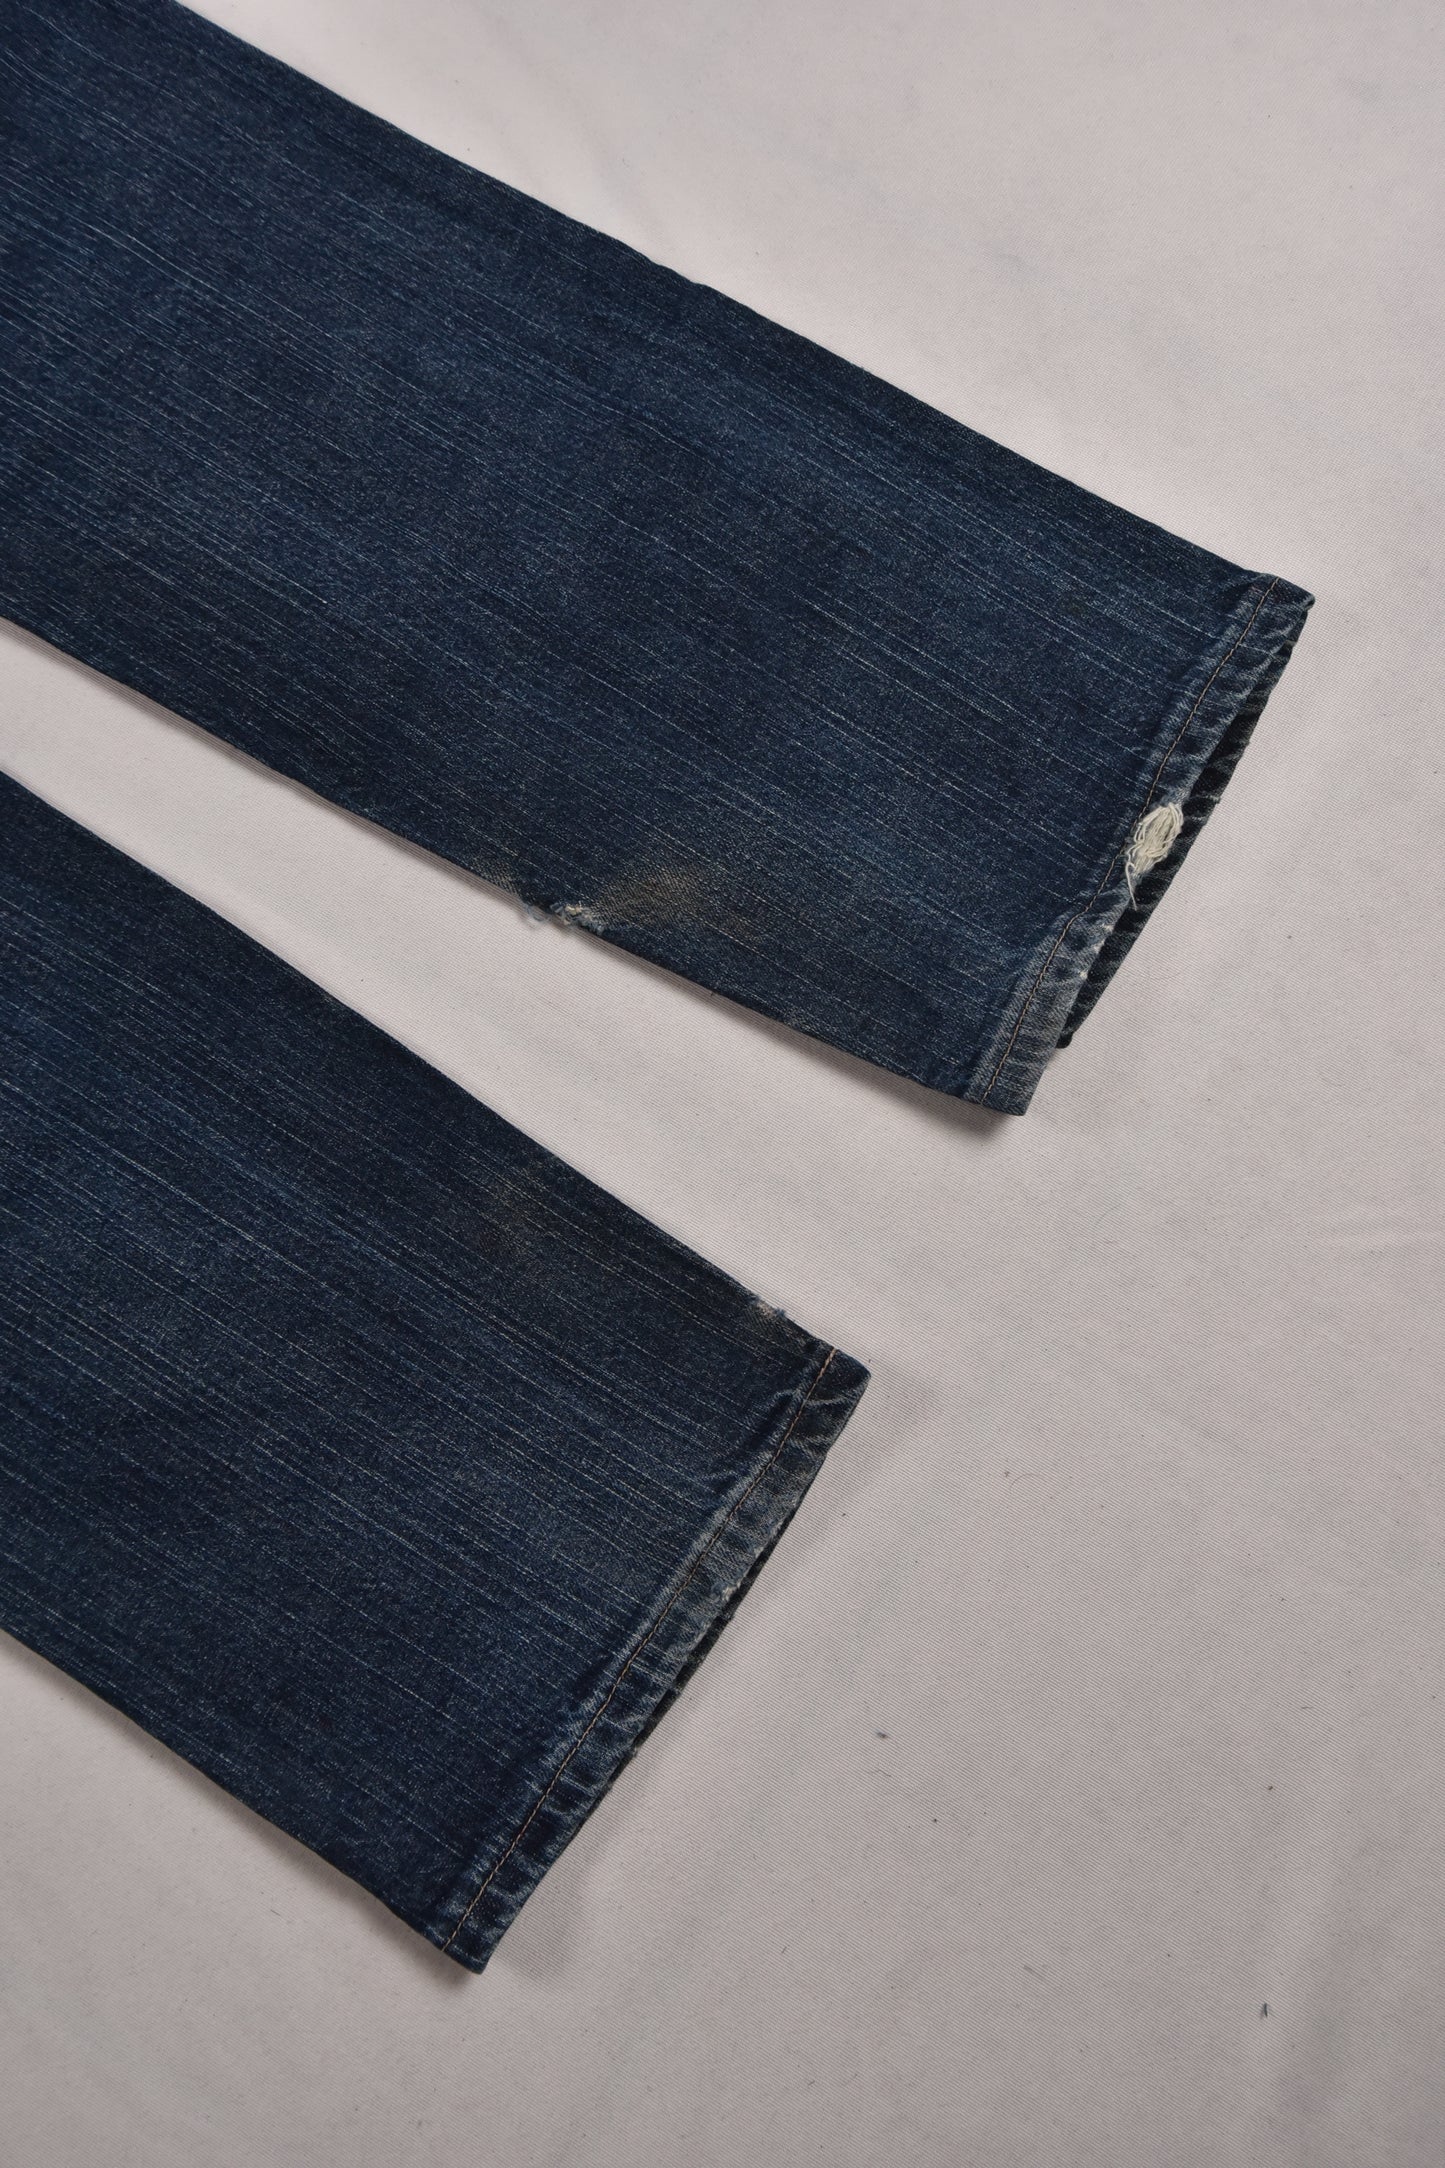 Carhartt Jeans Ignifugo Vintage / 34x32